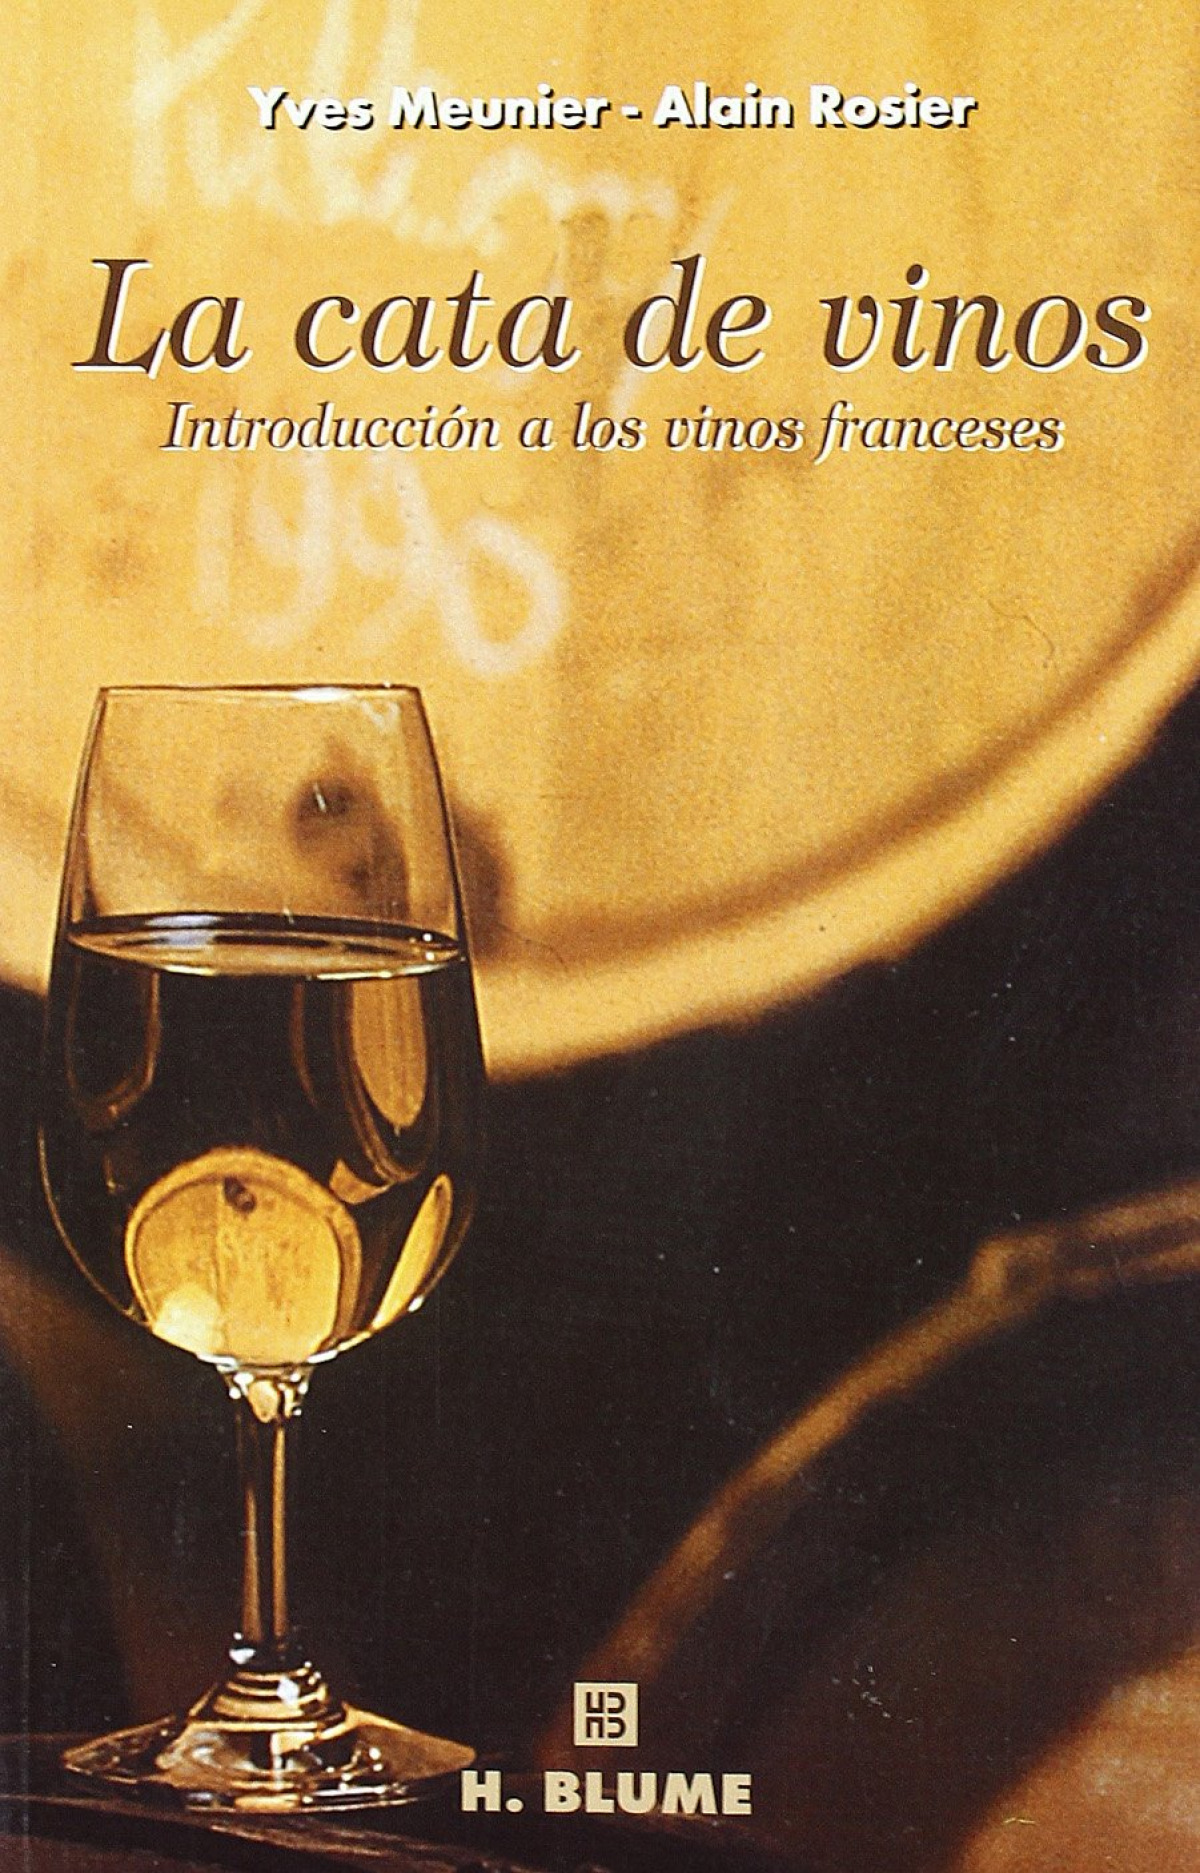 La cata de vinos - Meunier / Rosier            384     9788